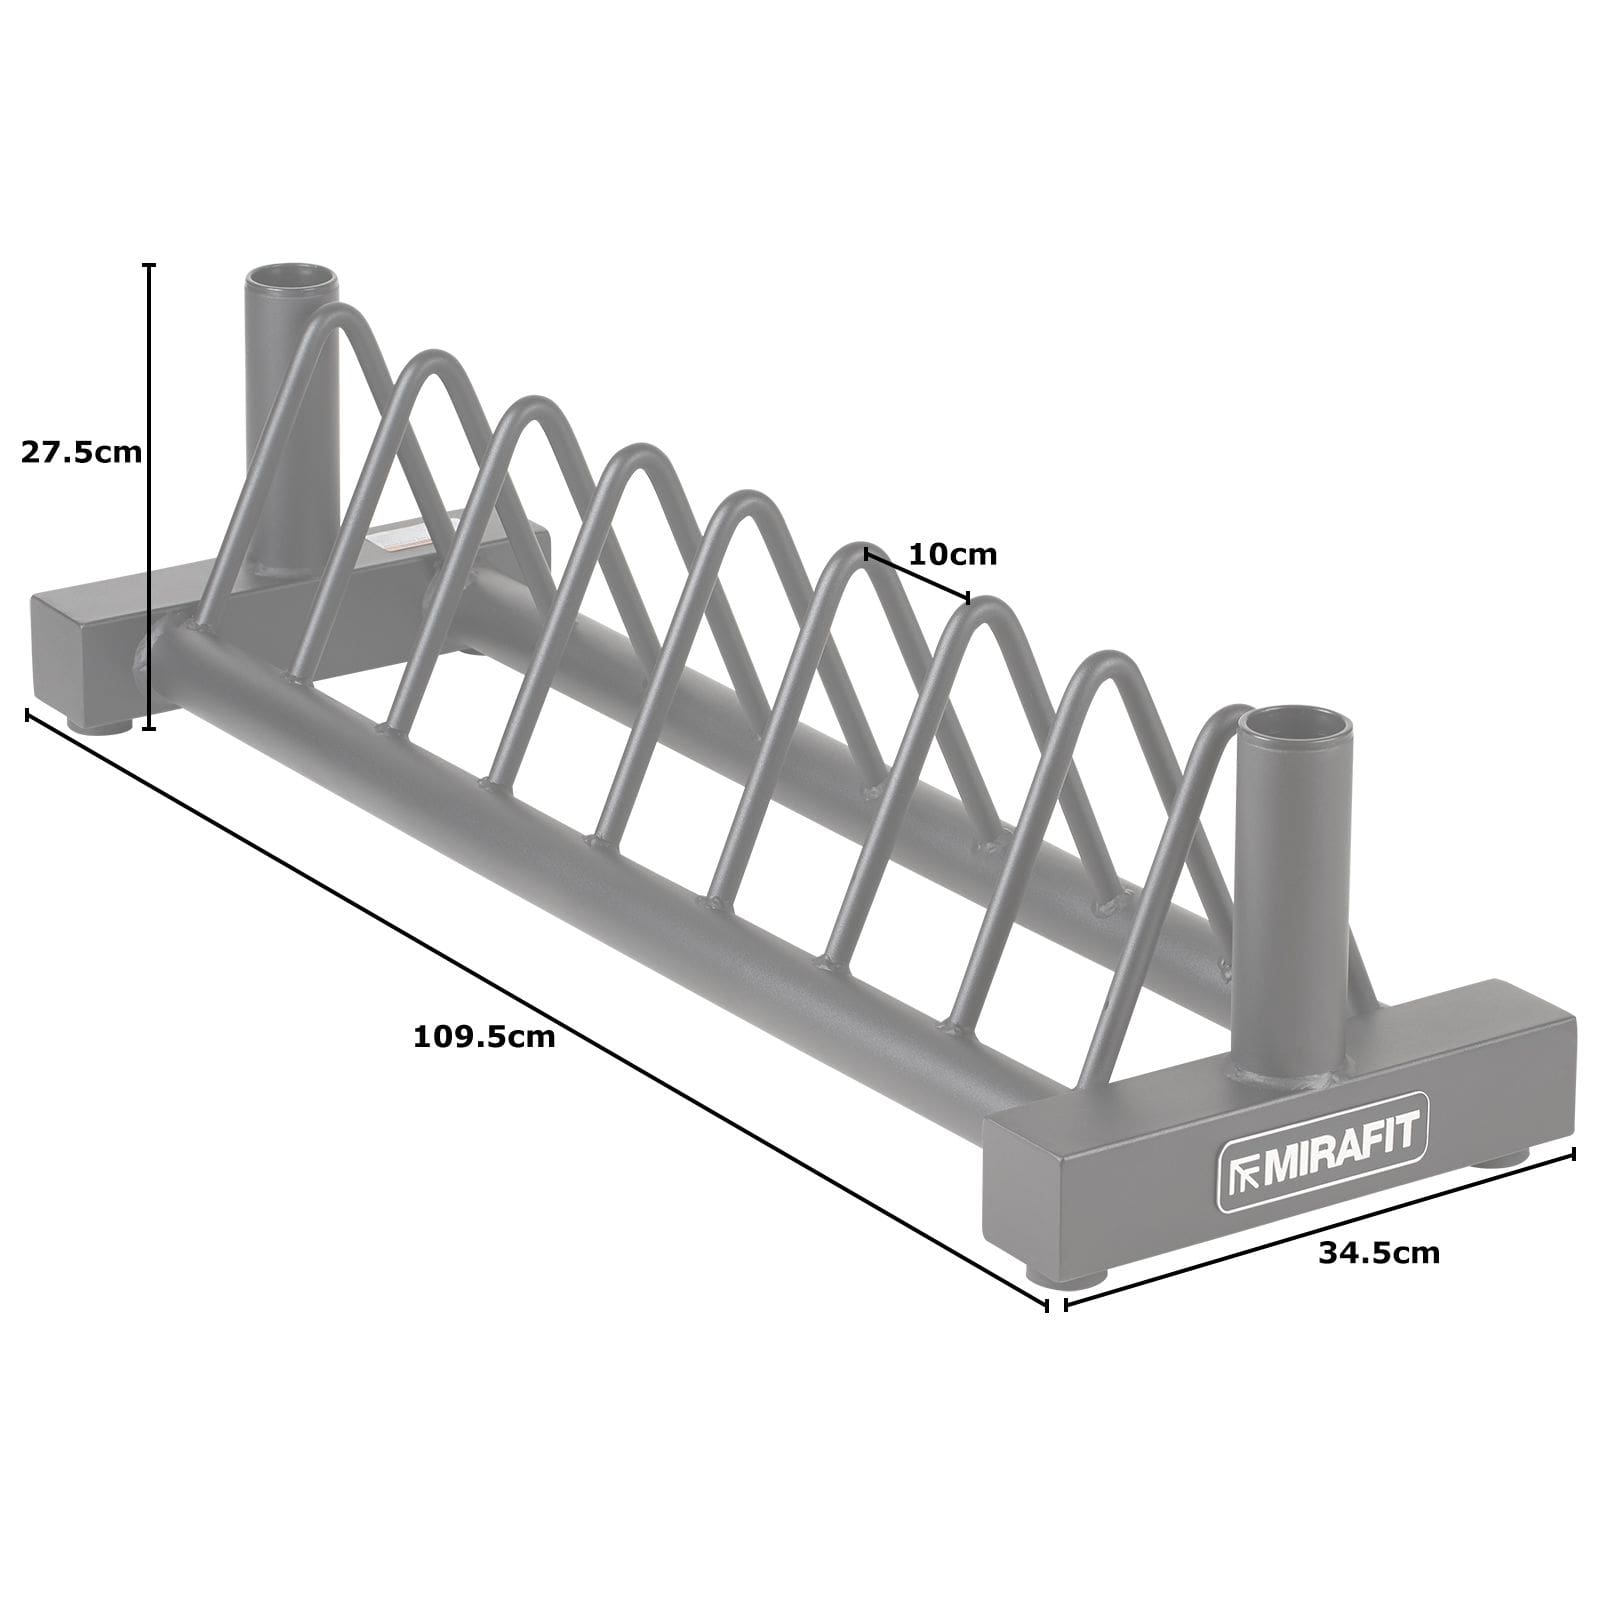 Mirafit Horizontal Plate Rack & Bar Stand Dimensions